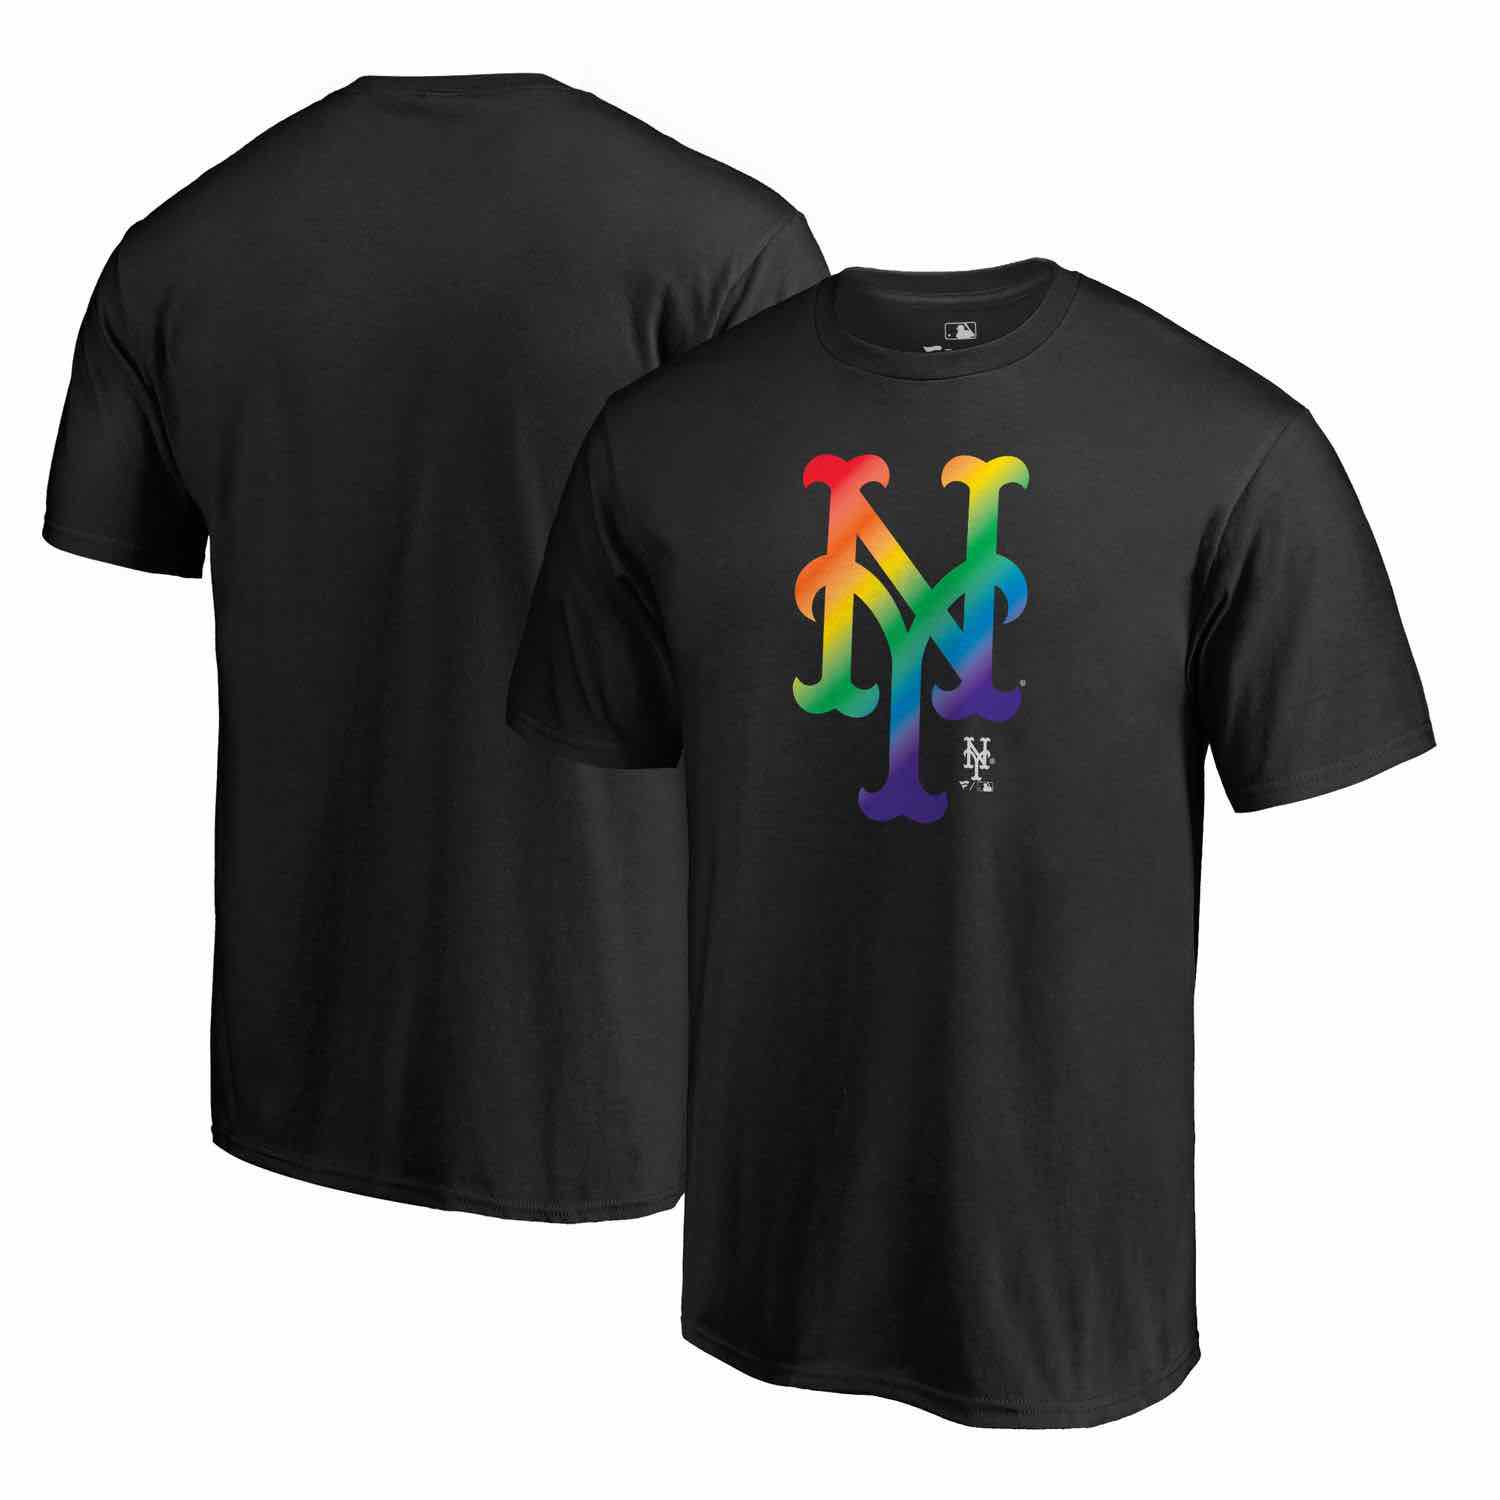 Mens New York Mets Fanatics Branded Pride Black T-Shirt